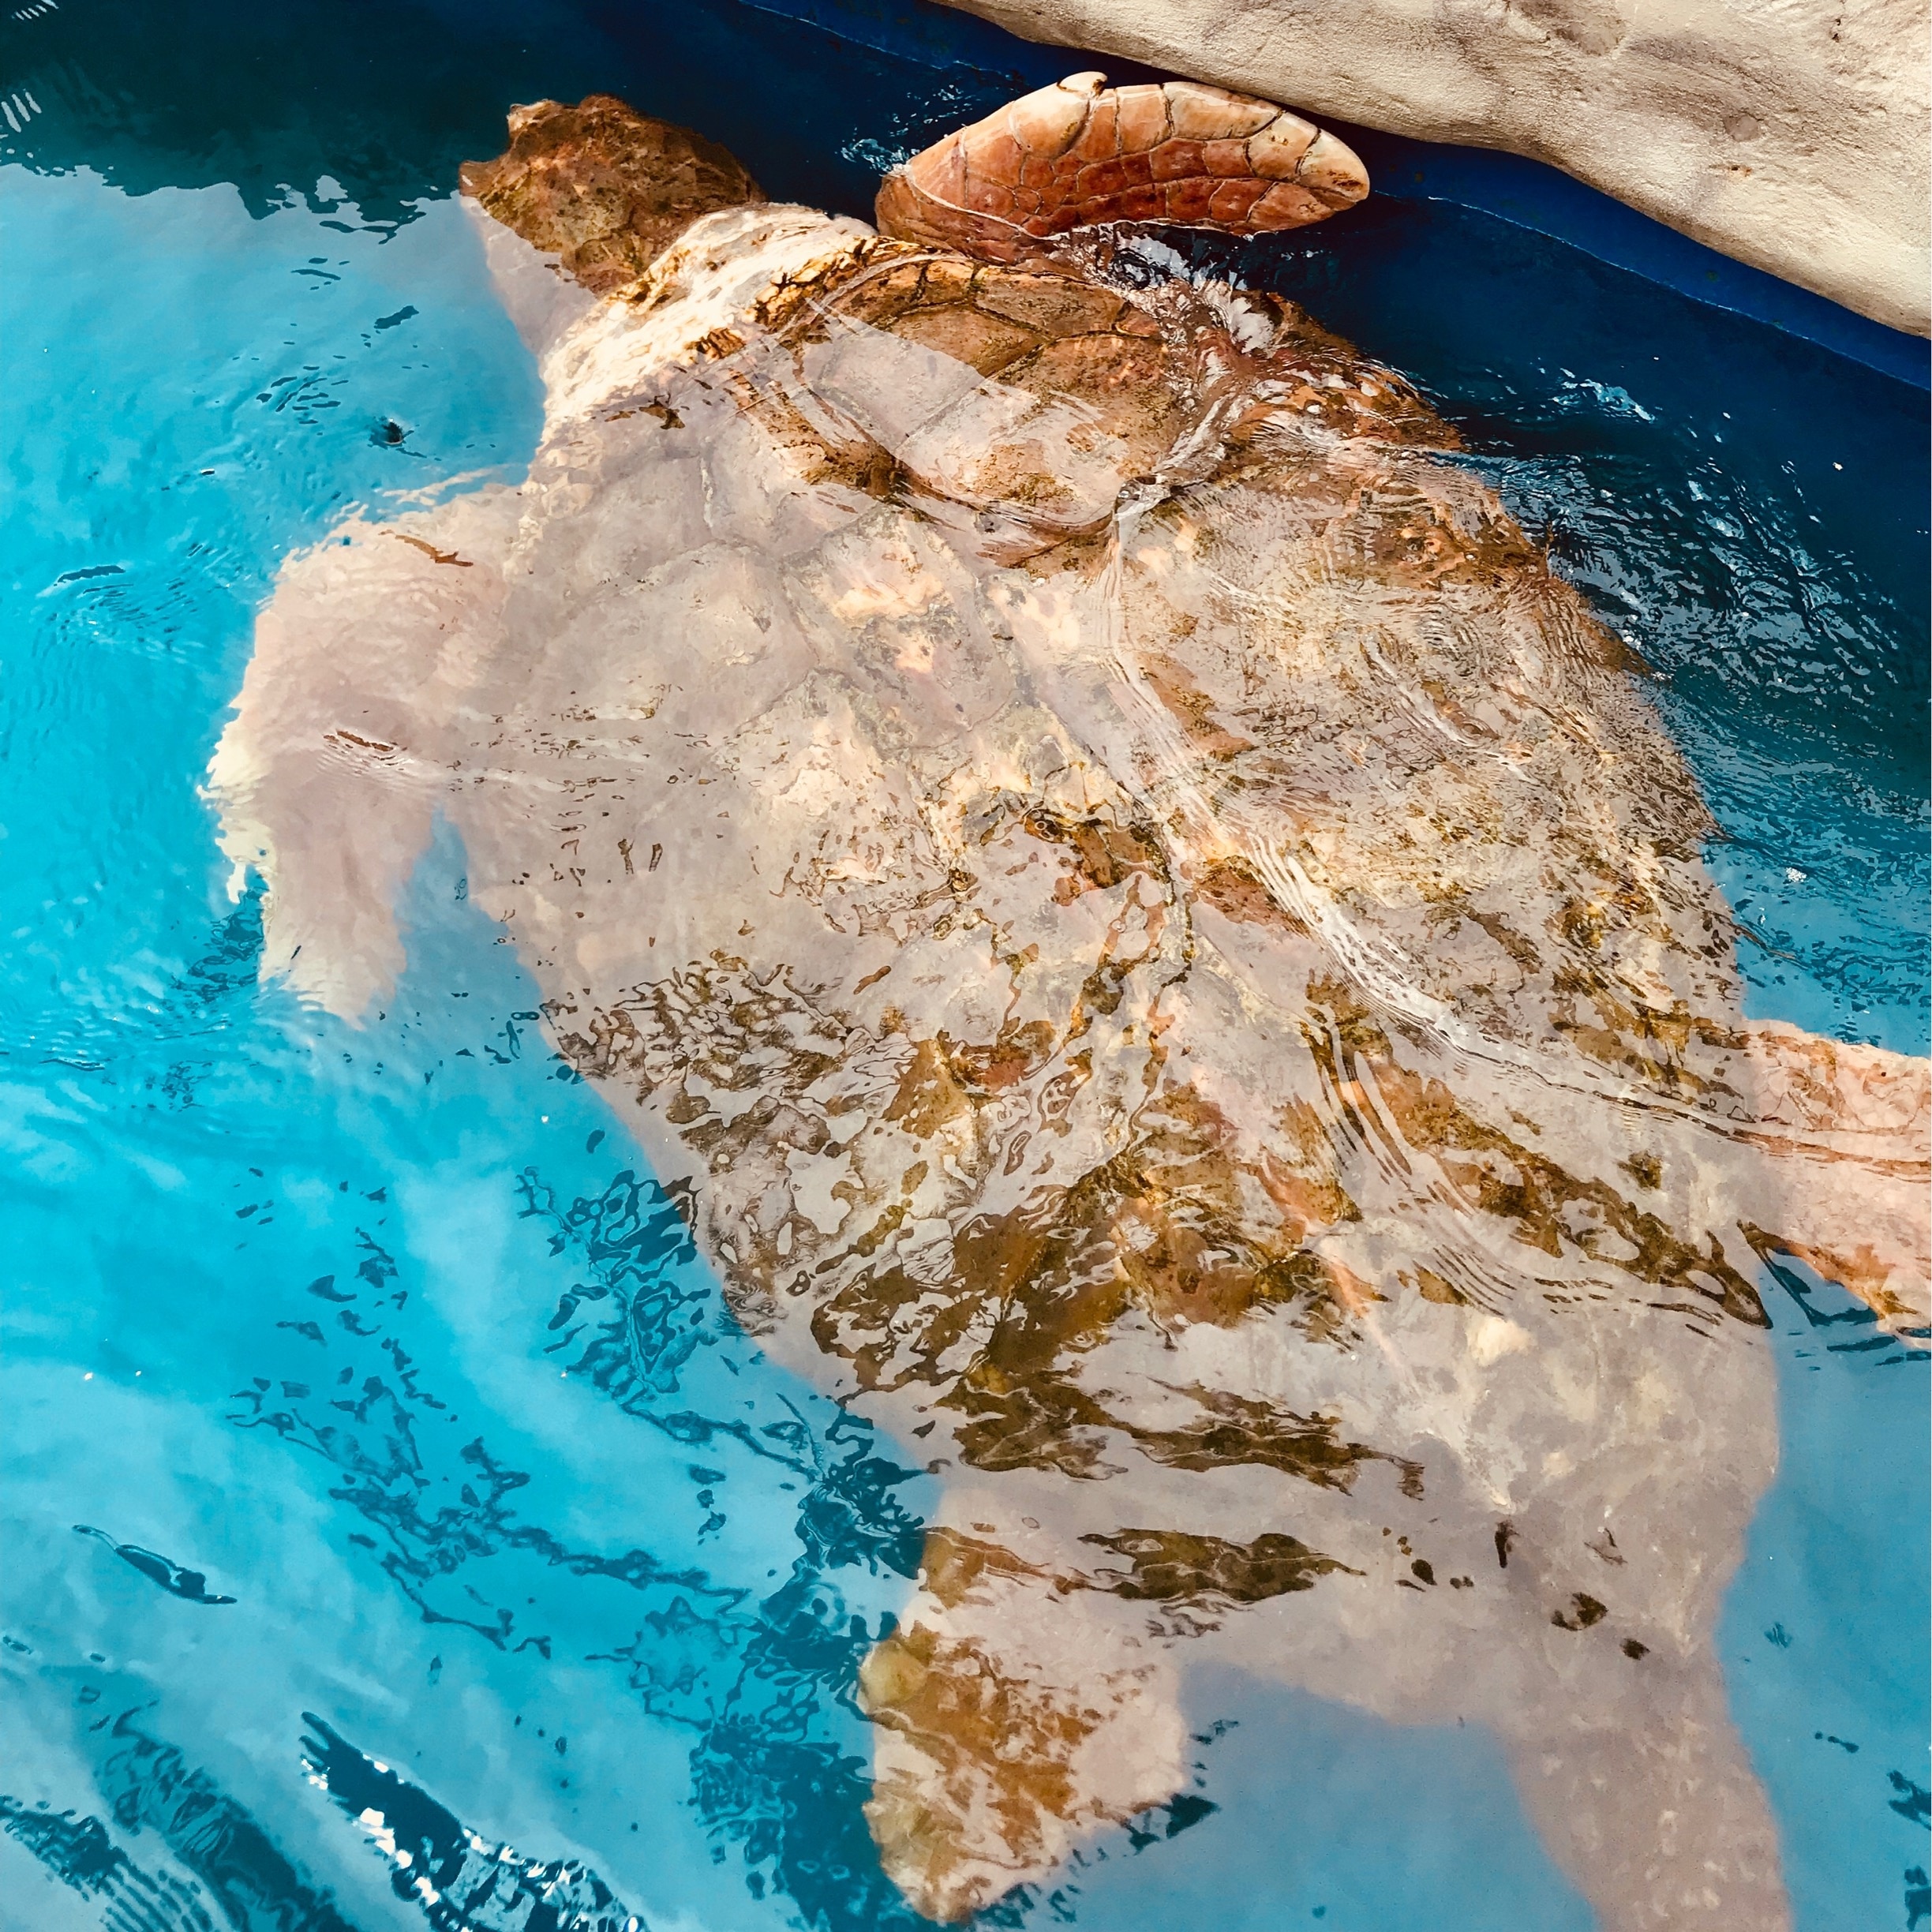 Projet TAMAR de conservation des tortues marines, Mata de São João, Bahia (état), Brésil